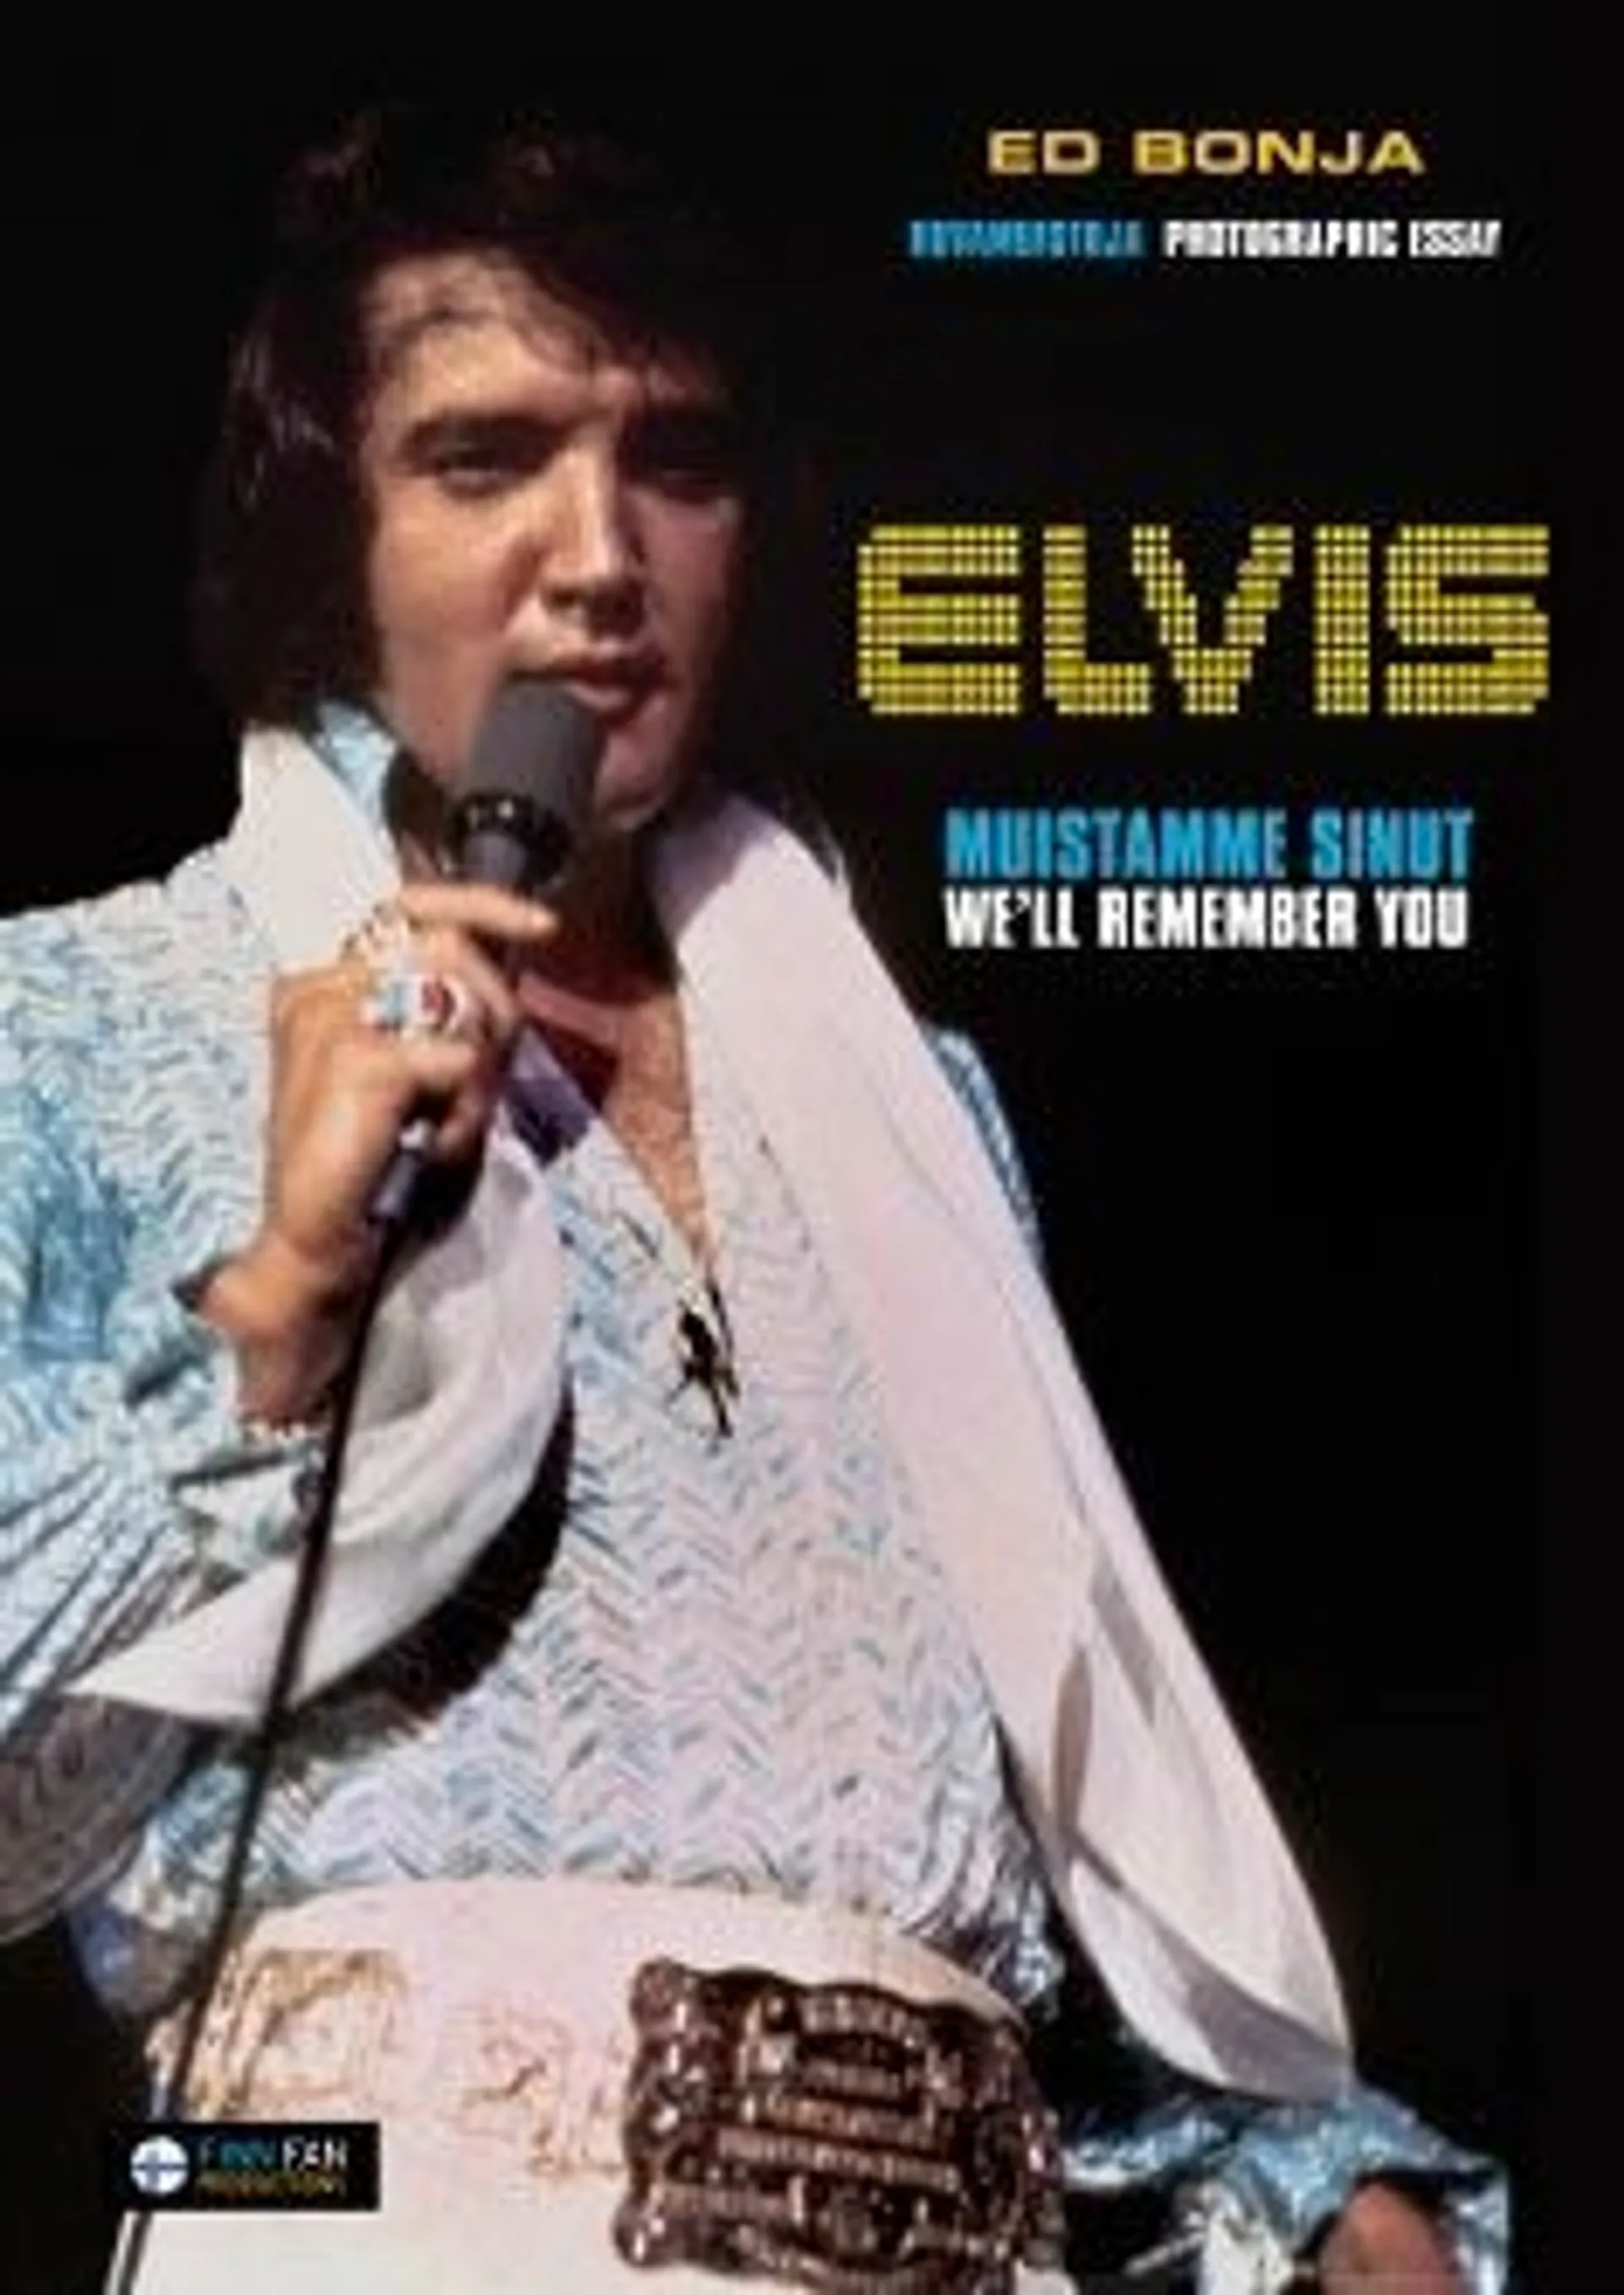 Bonja, Elvis - We'll Remember You  - Muistamme sinut : Photographic Essay - Kuvamuistoja